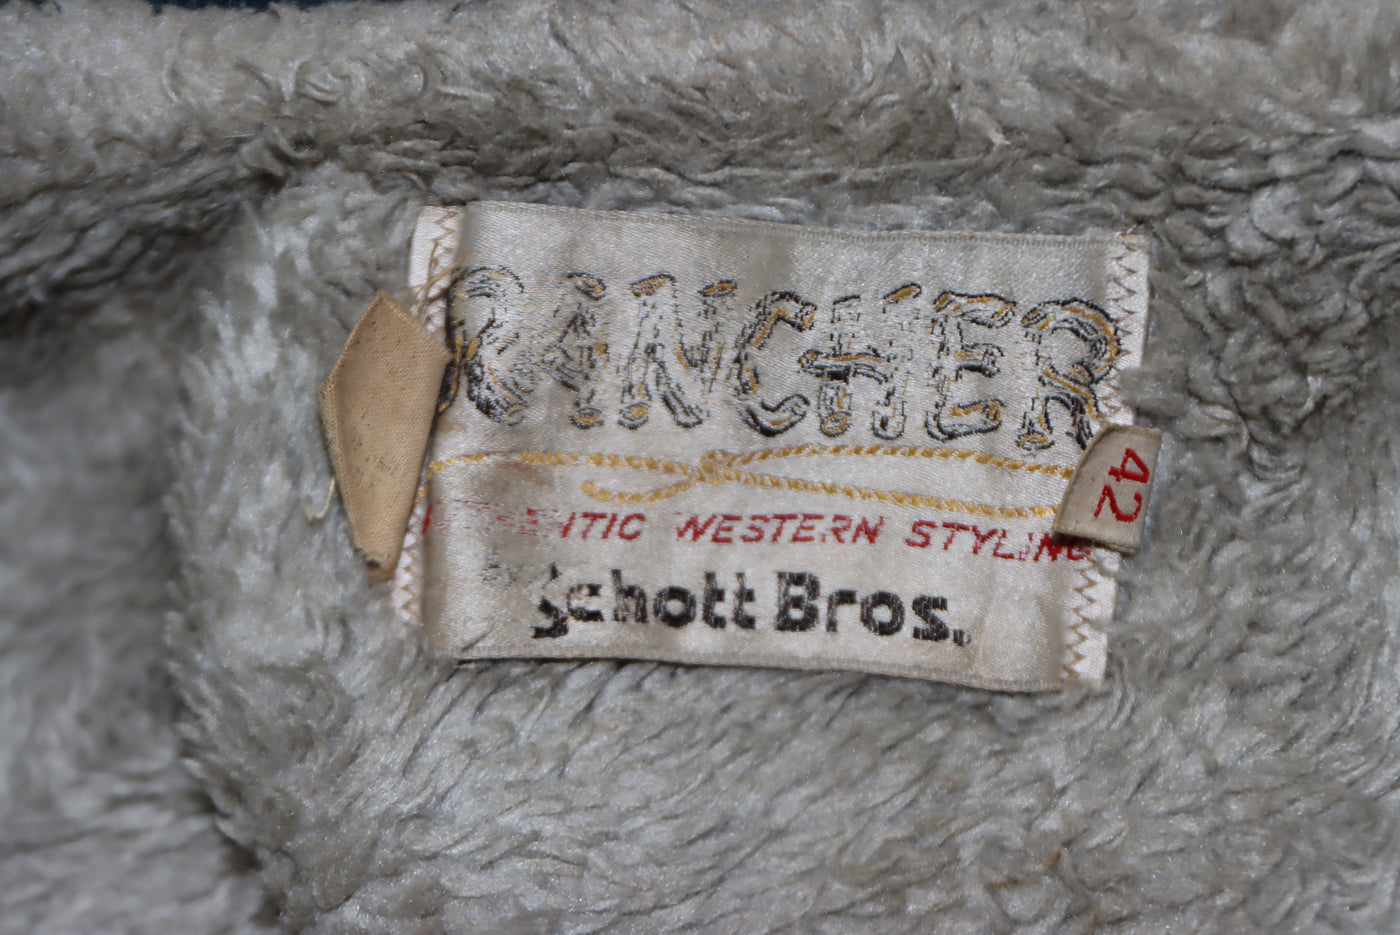 Schott Bros Autentic Western Styling Rancher taglia 42